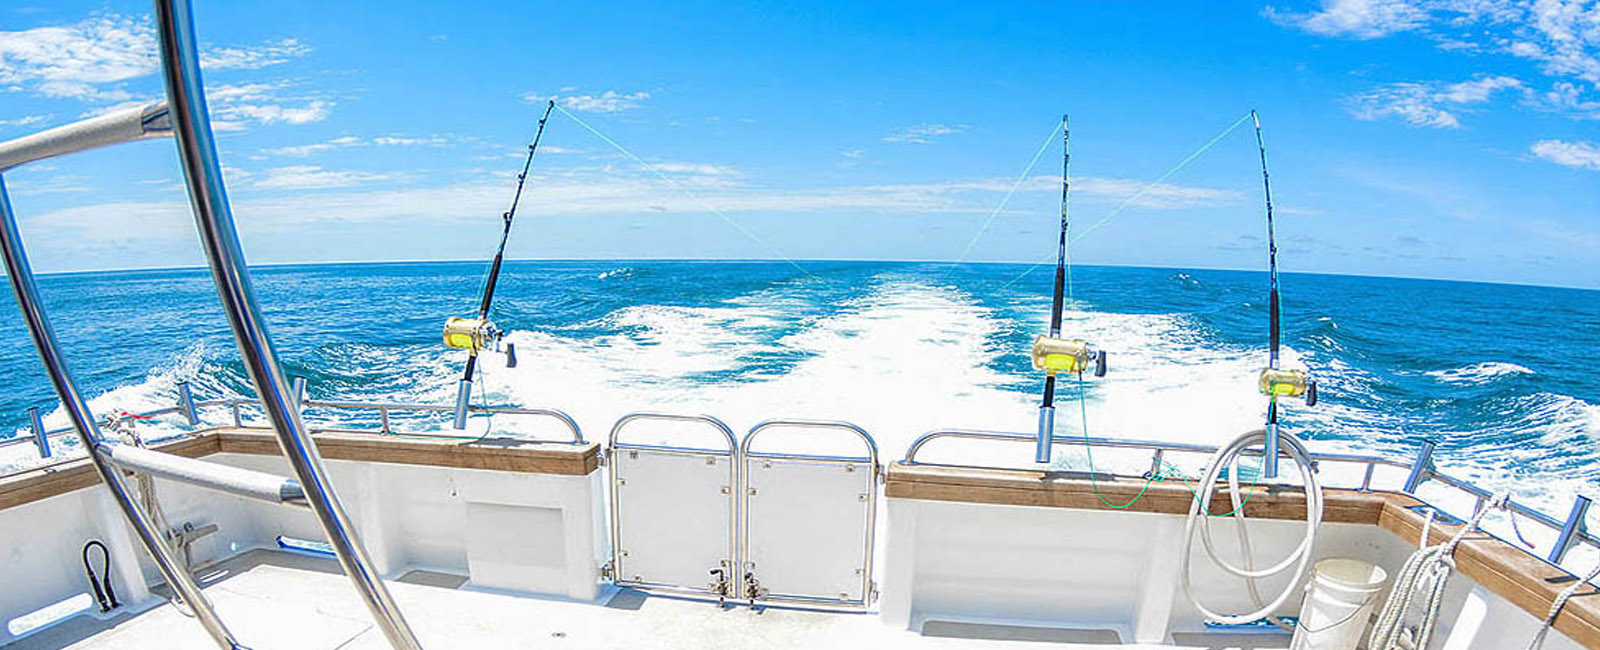 Glenalan-fishing-rods-Abrolhos-Islands-fishing-trips-charters-1